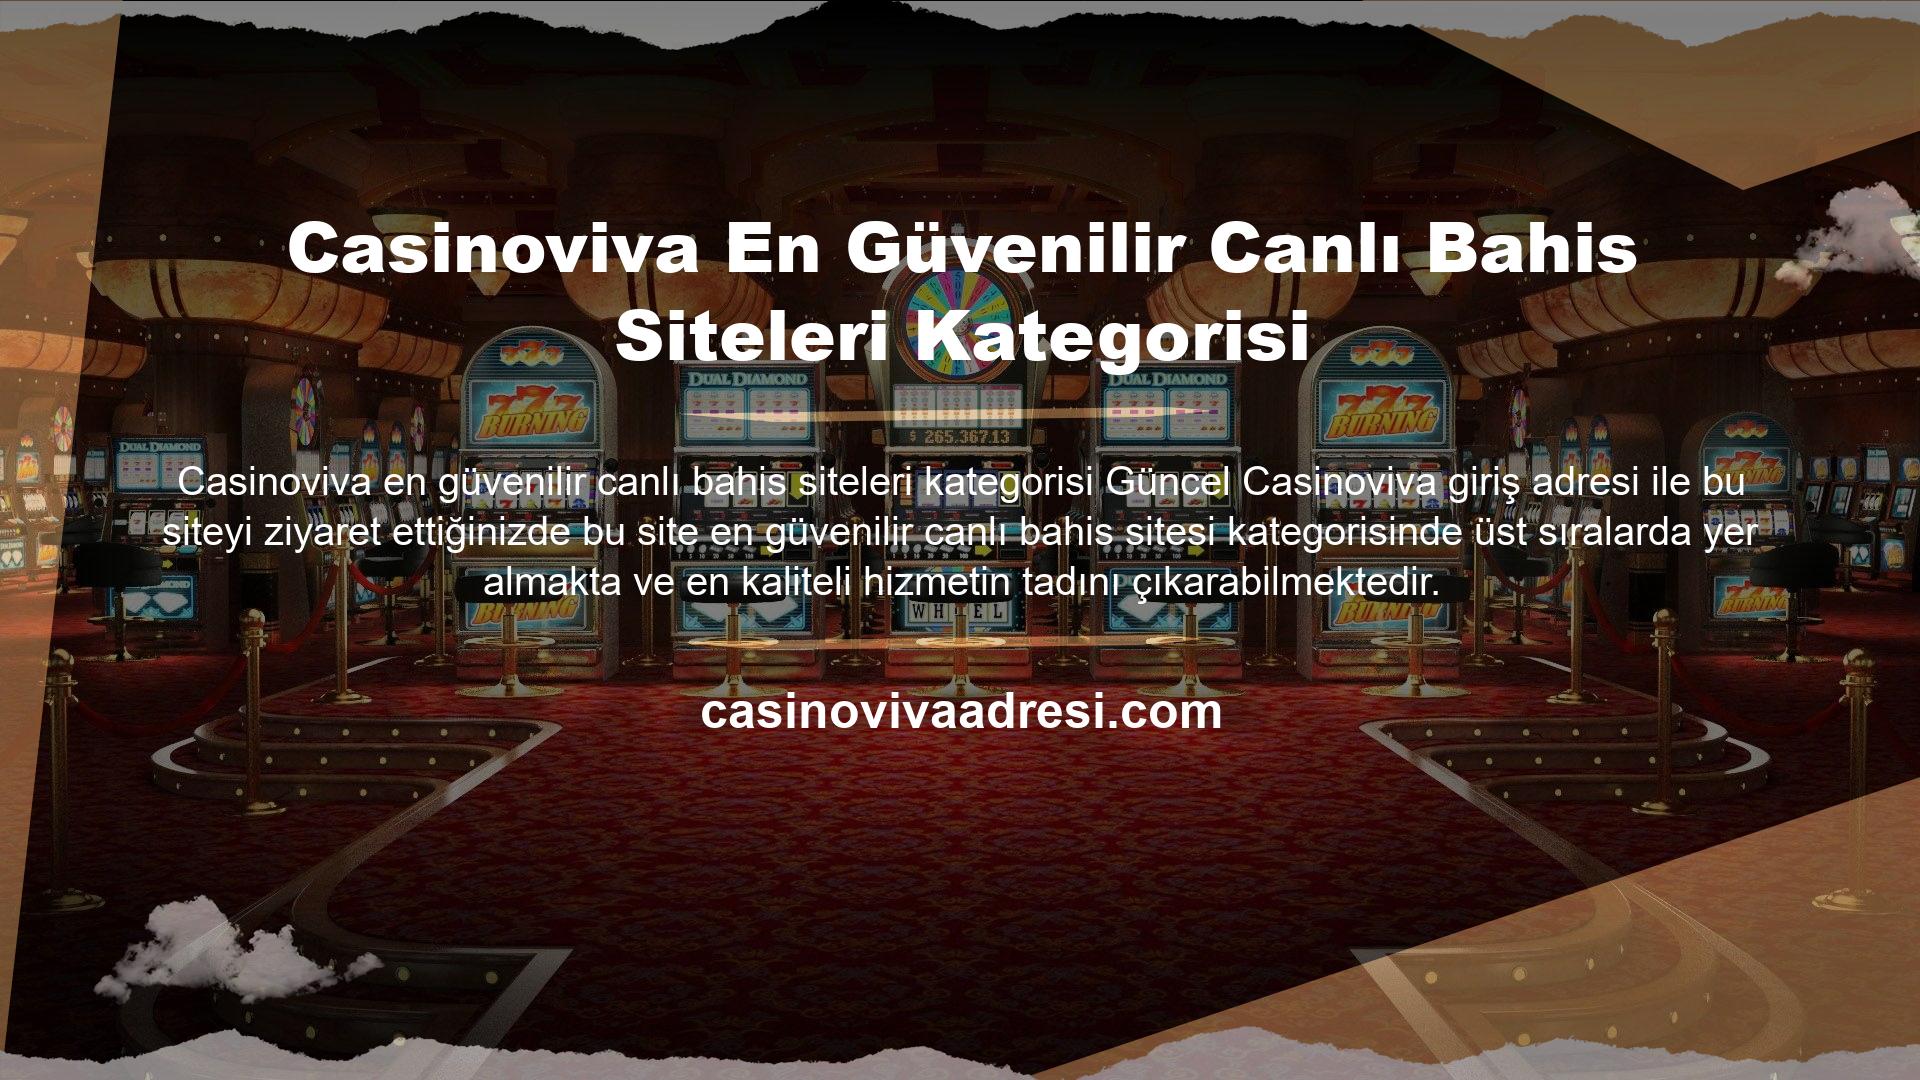 Casinoviva mevcut oturum açma adresi Casinoviva olarak belirlendi